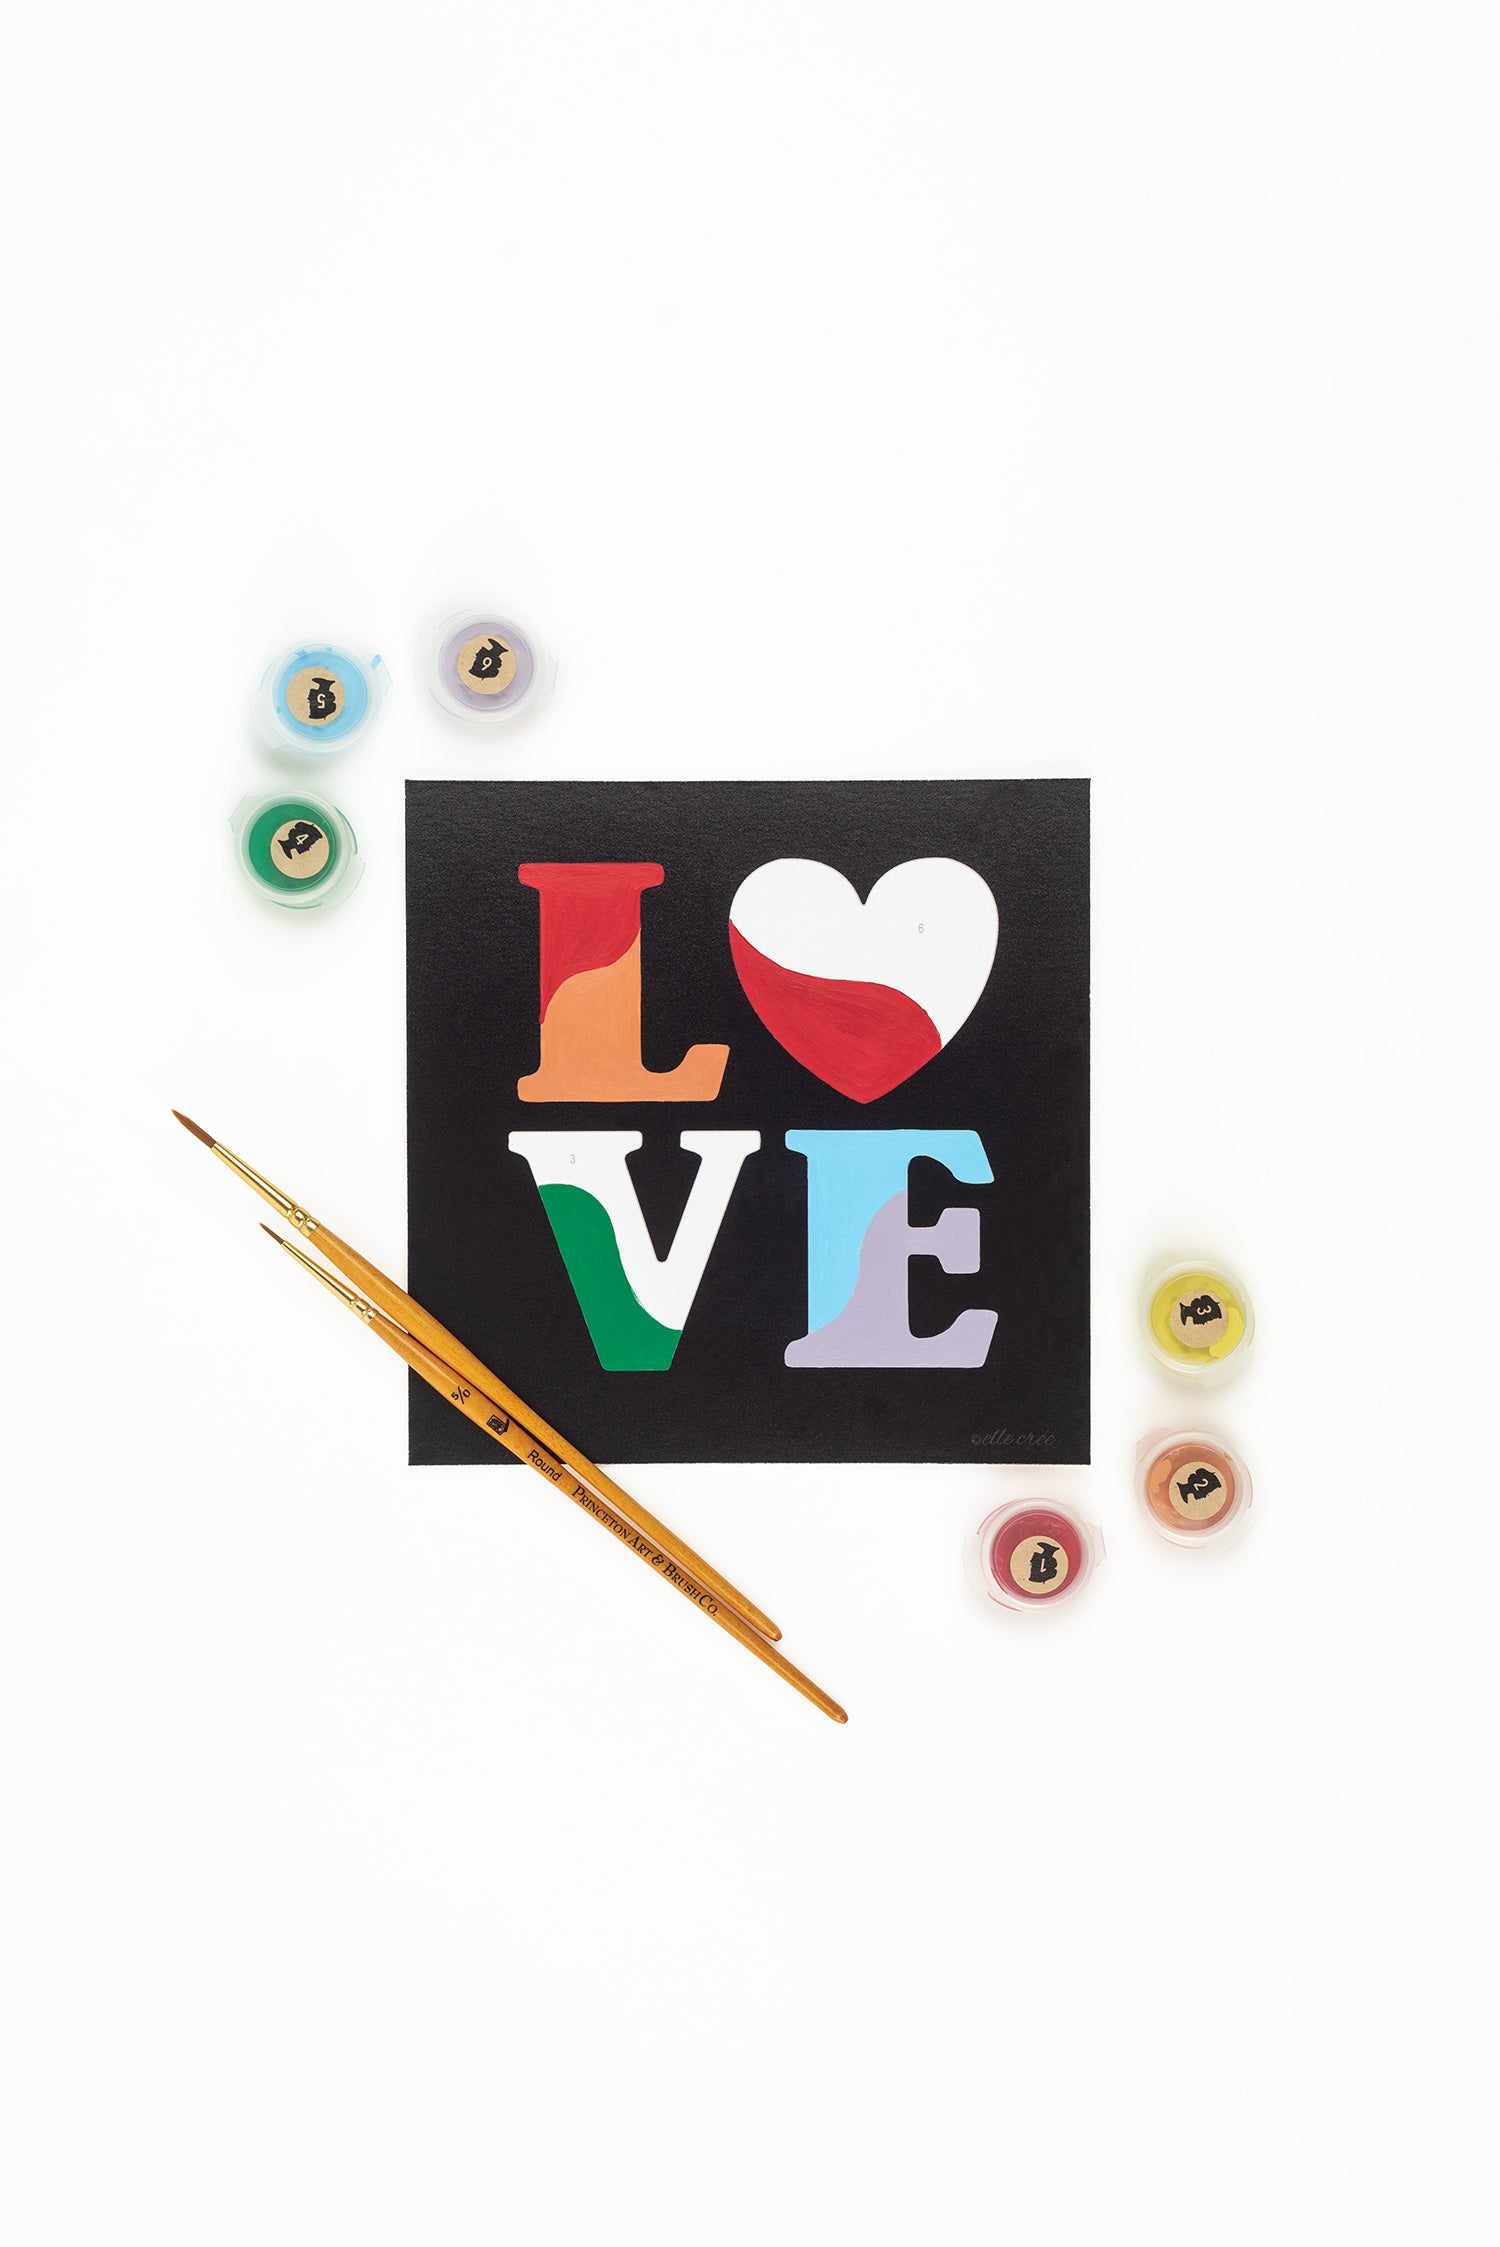 Kids Pride LOVE | 6x6 mini paint-by-number kit - Elle Crée